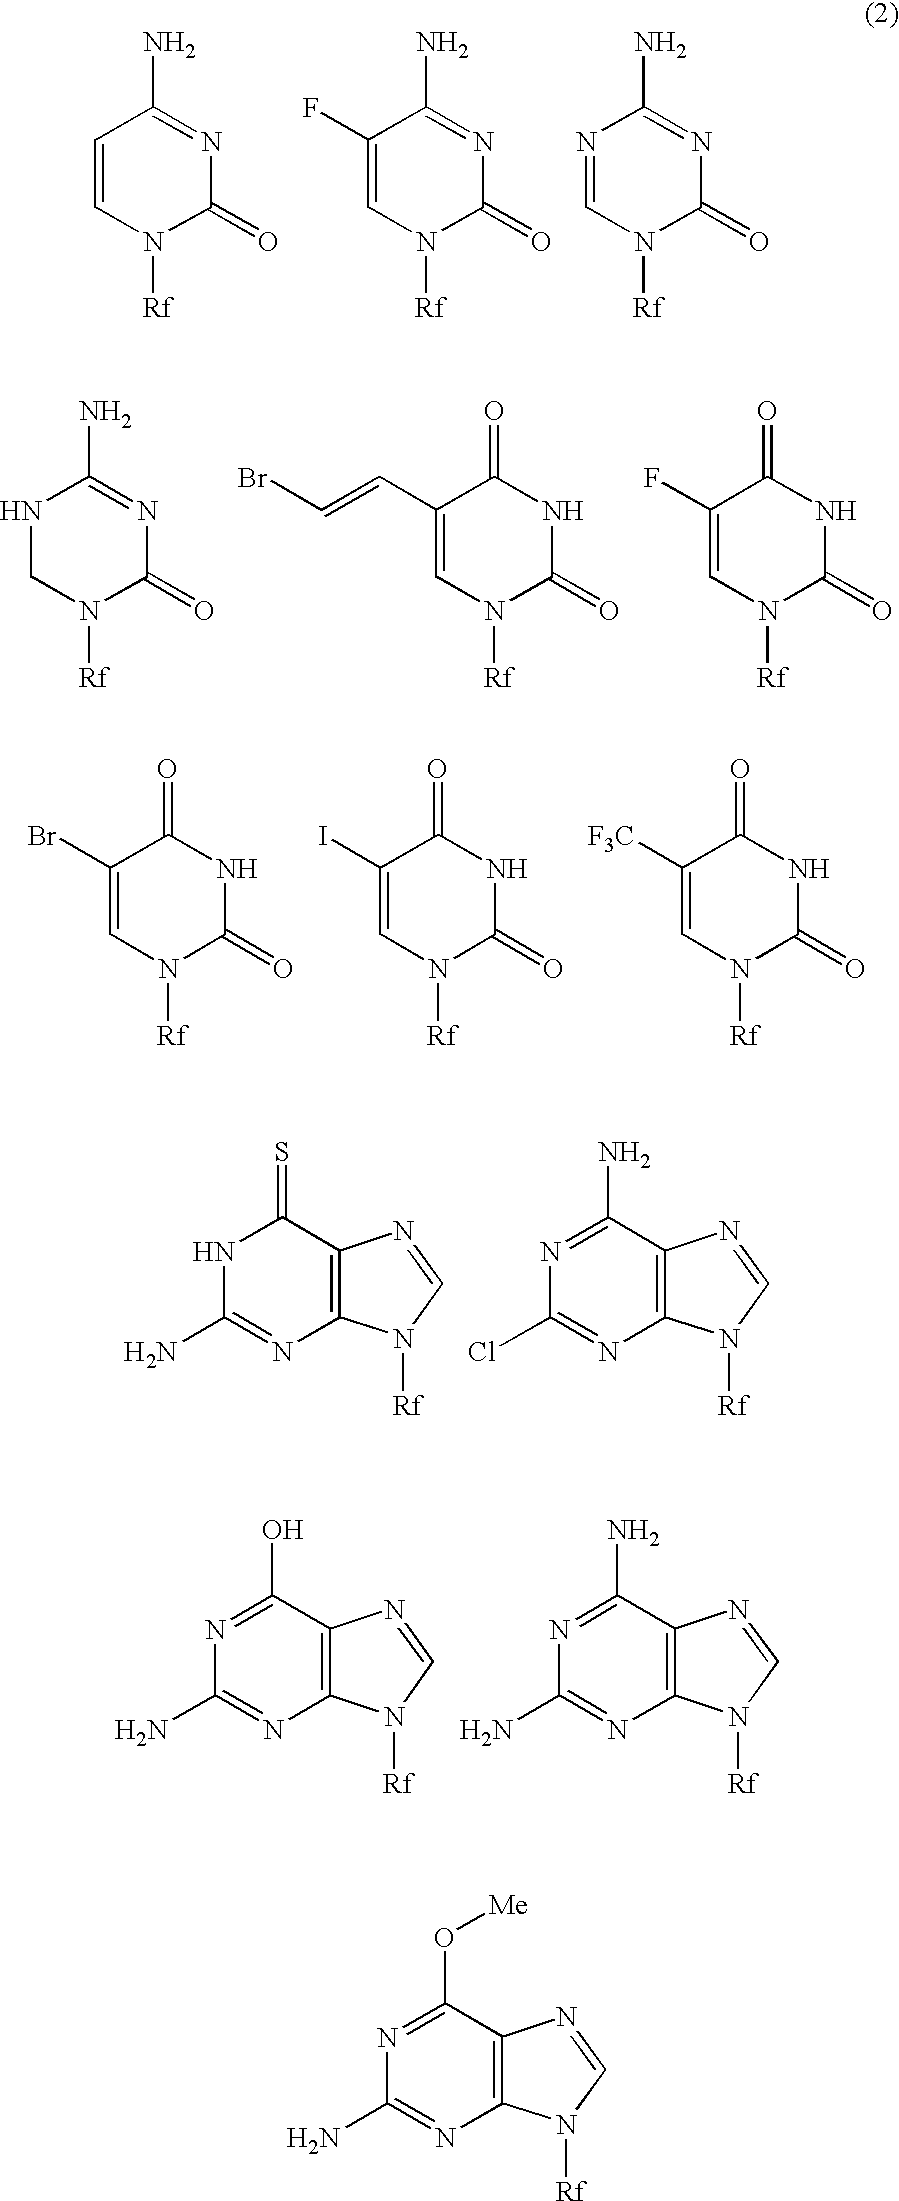 High molecular weight derivative of nucleic acid antimetabolite